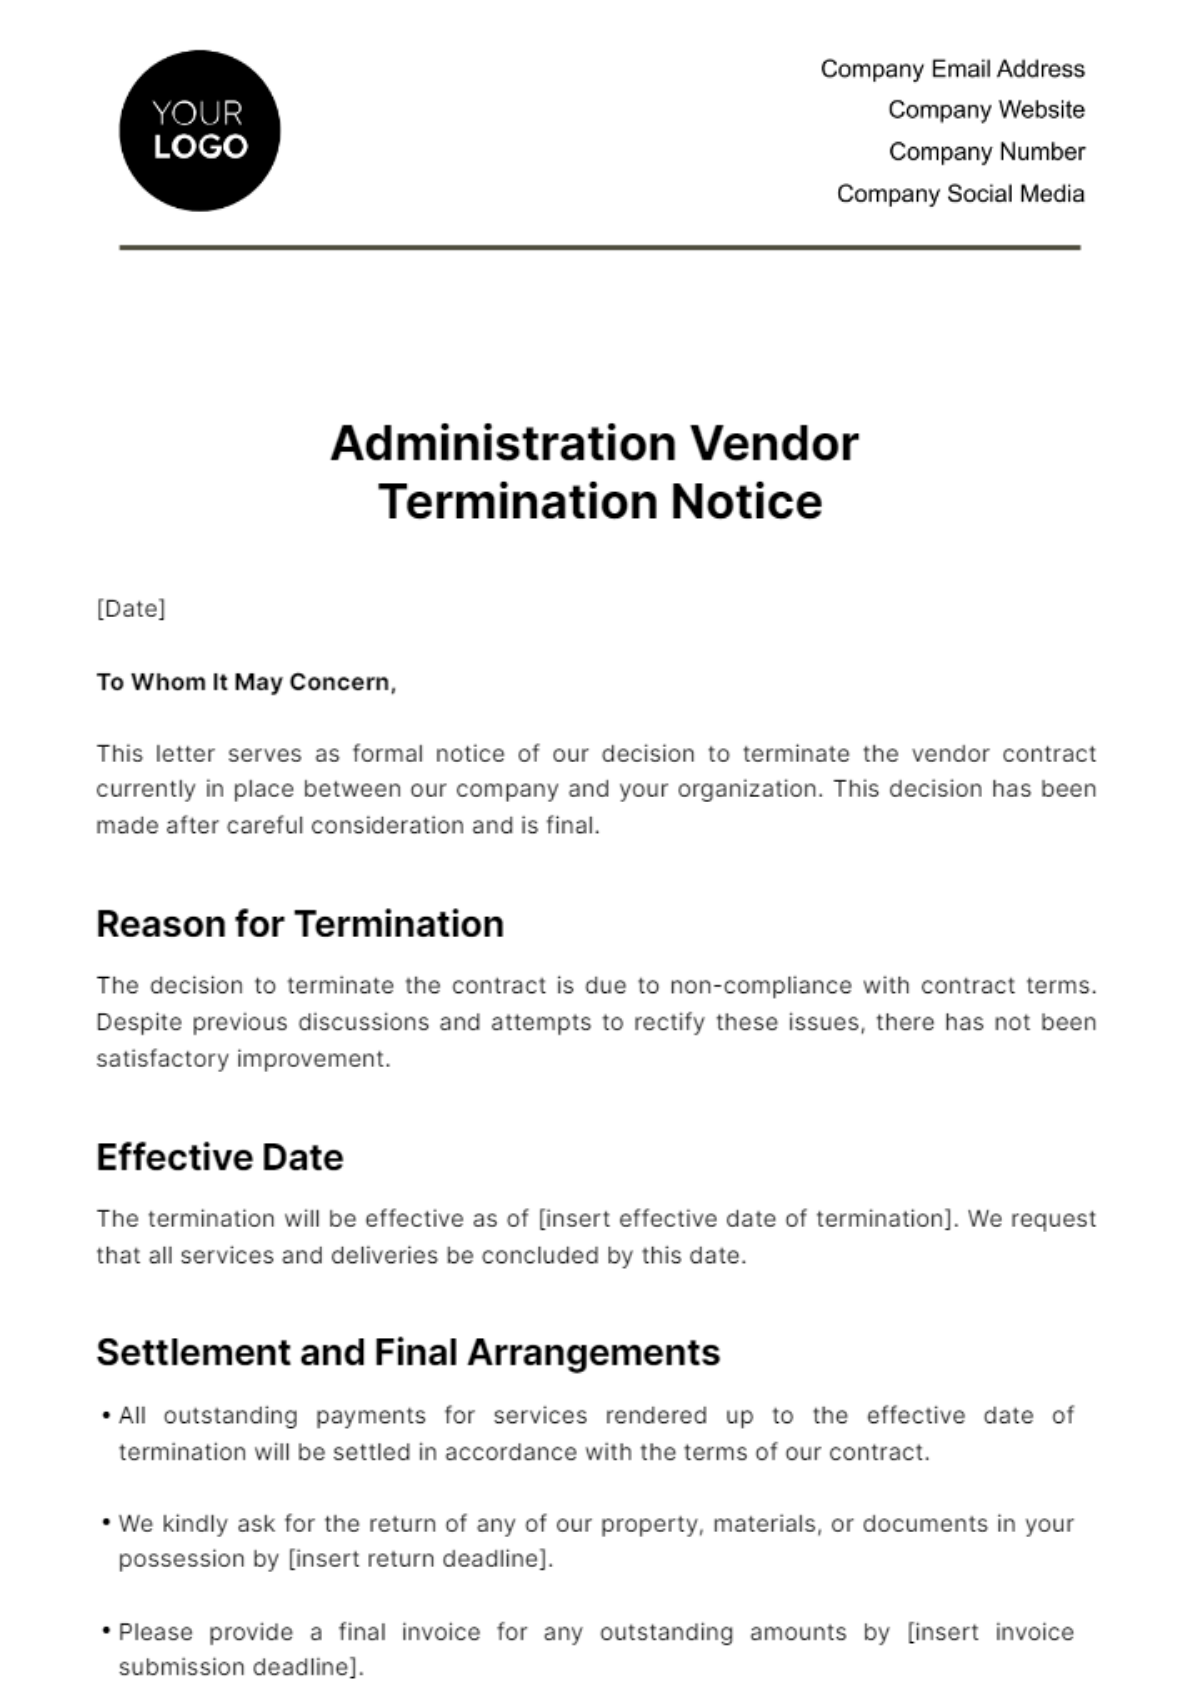 Administration Vendor Termination Notice Template